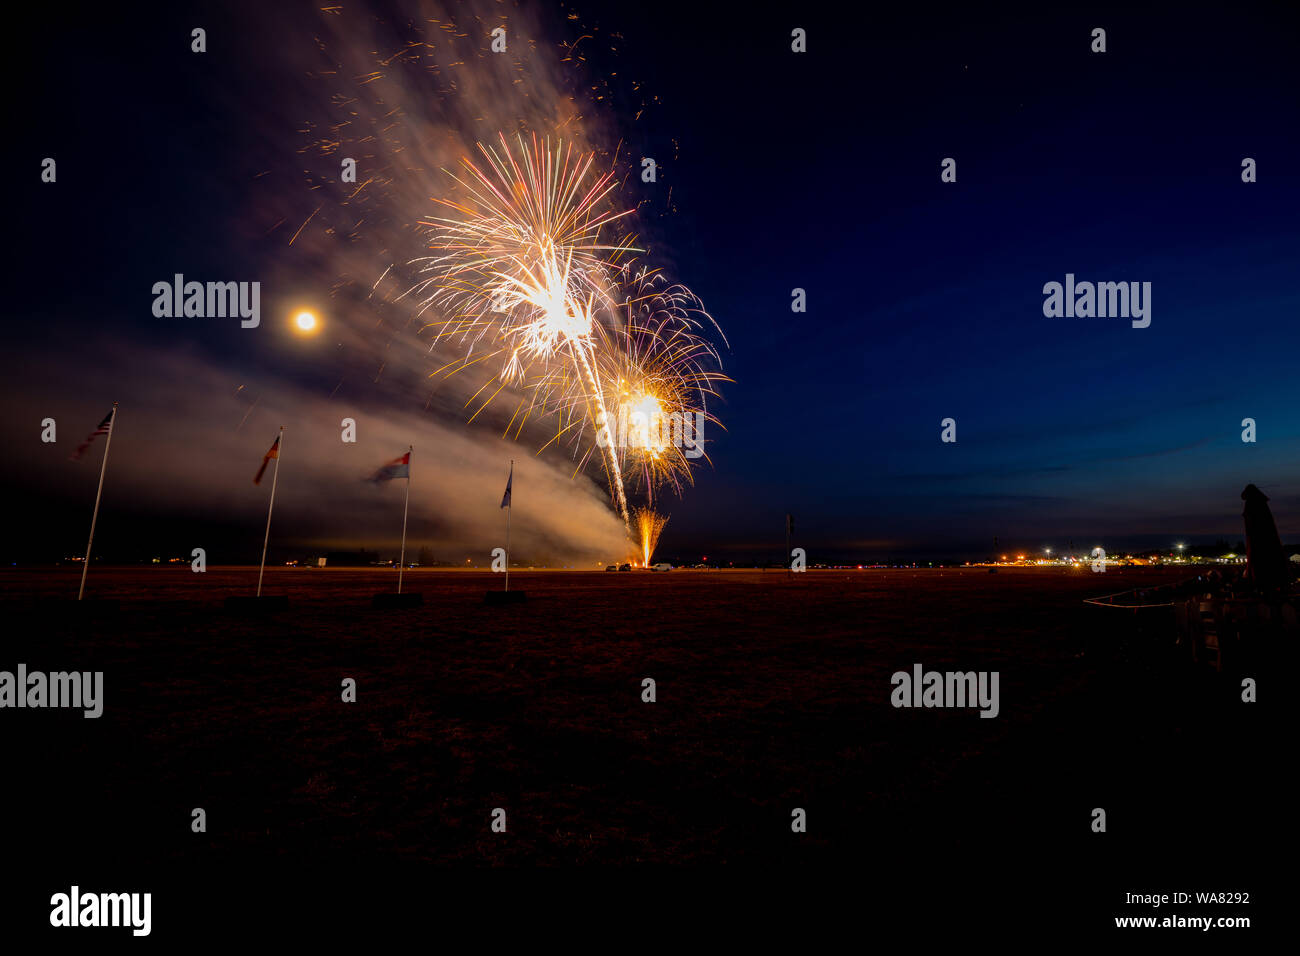 Big fireworks display in the night sky Stock Photo